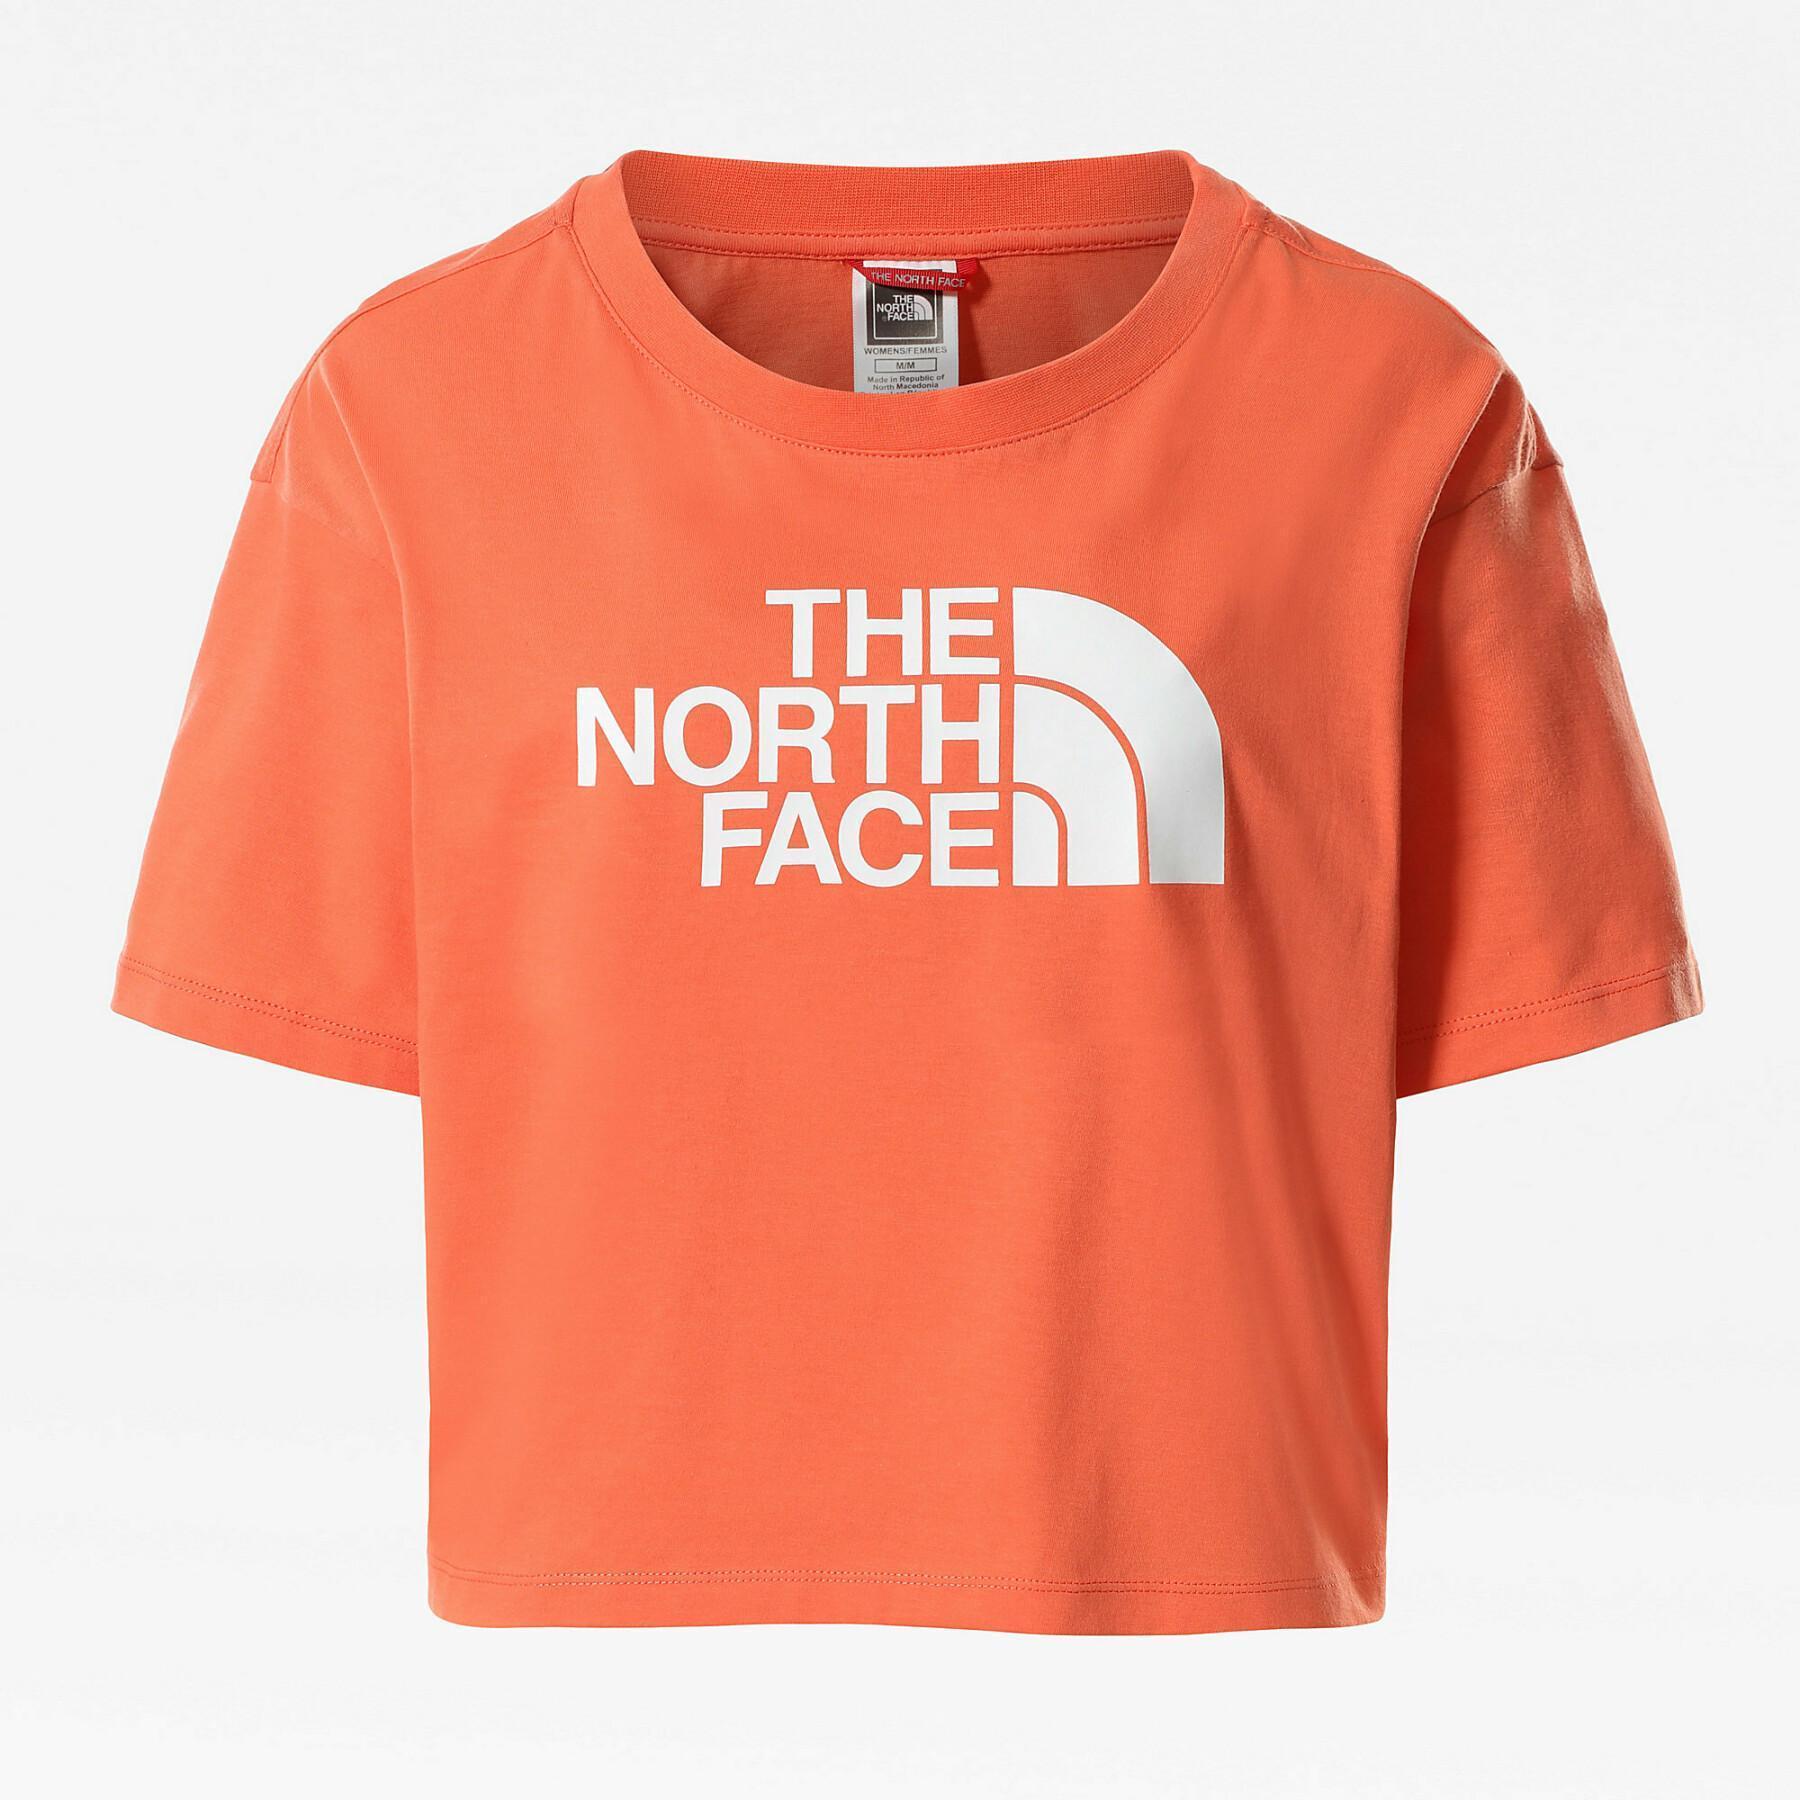 Camiseta feminina The North Face Court Easy